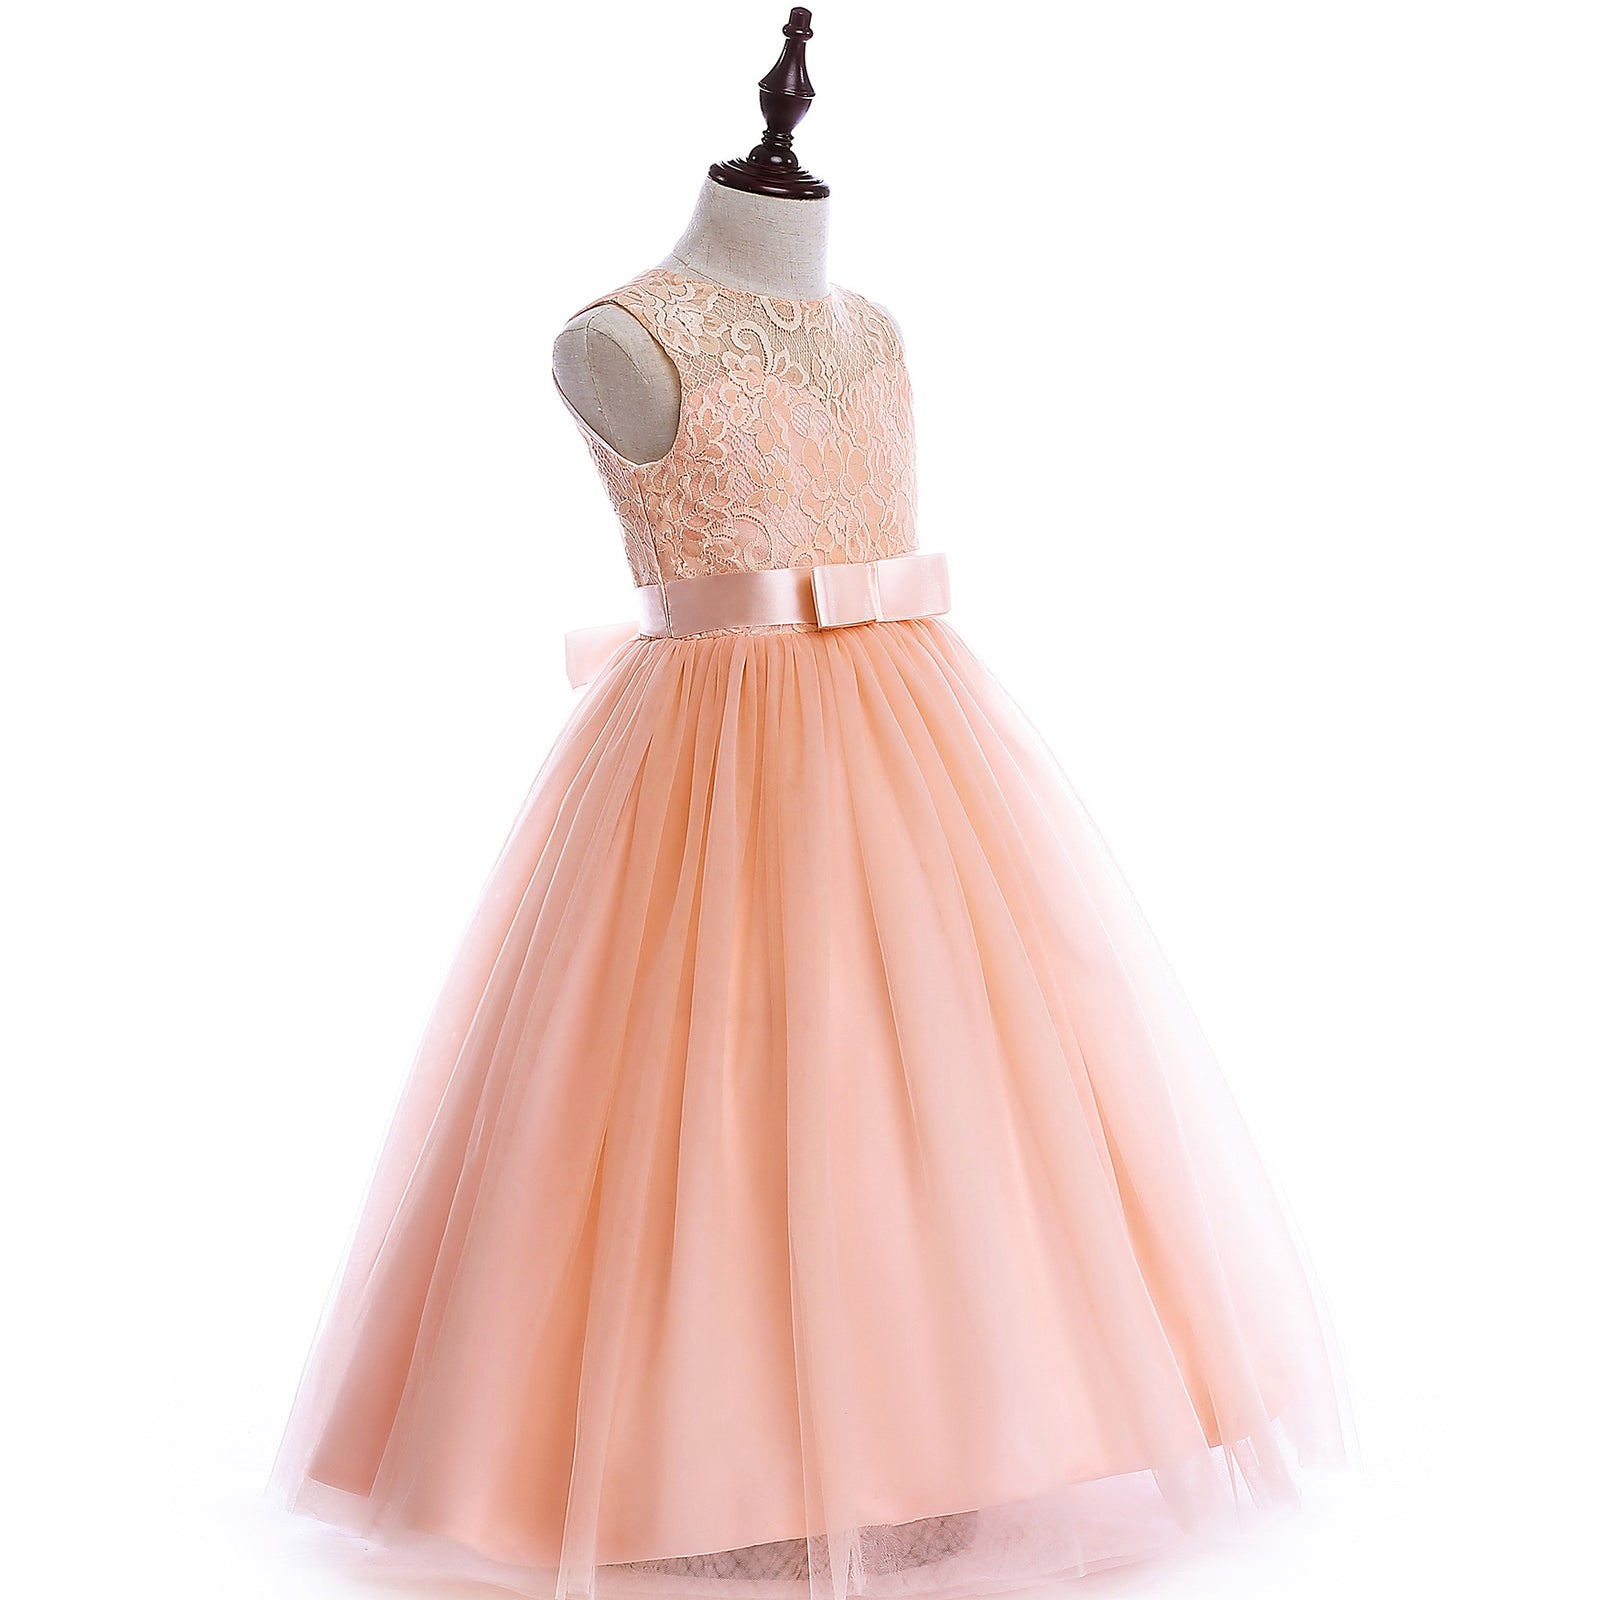 Big Kids Wedding Dress Girls Pettiskirt Lace Dress Costumes - TryKid